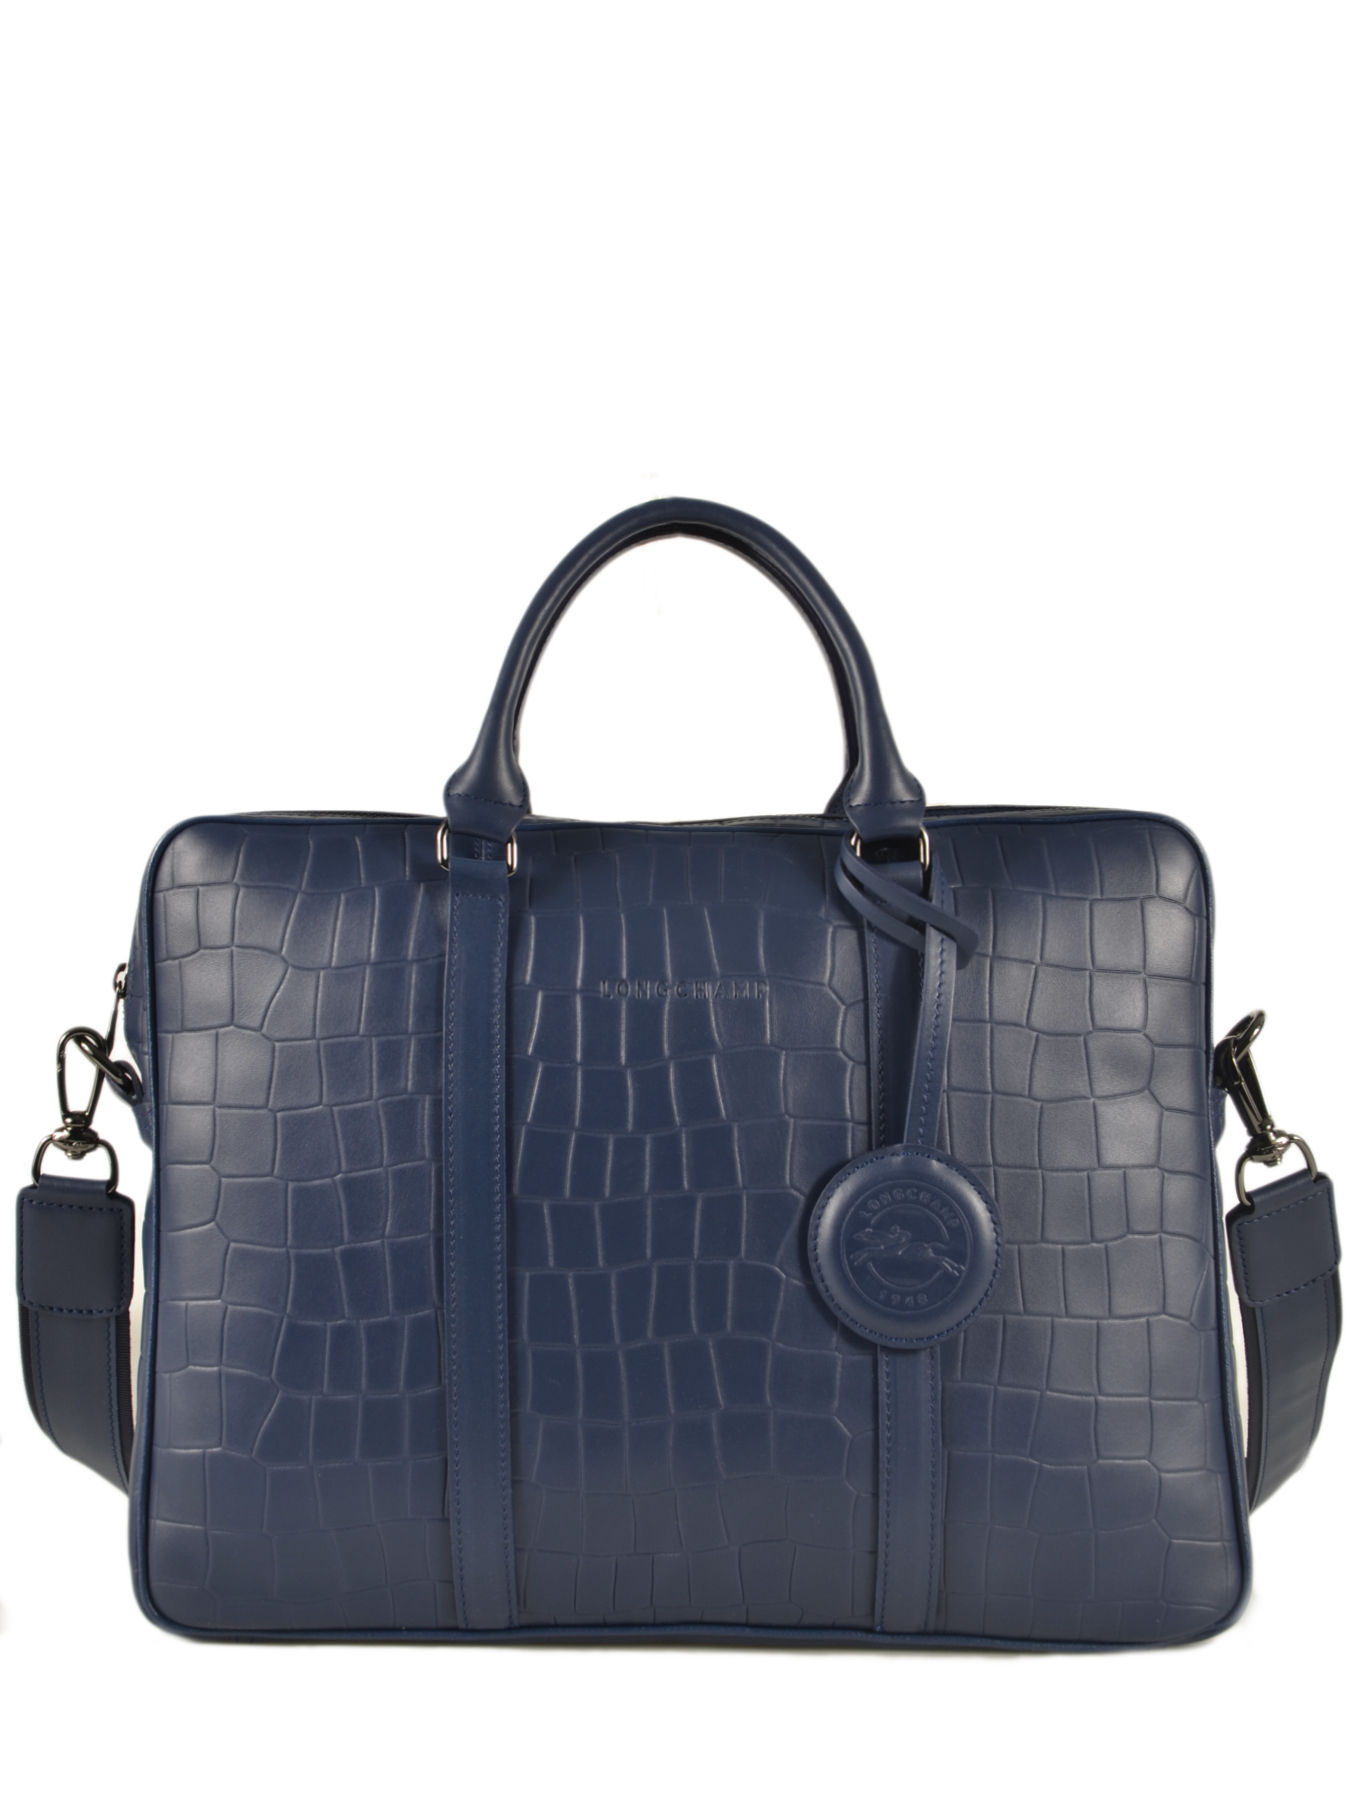 Longchamp Briefcase 2121945 - best prices